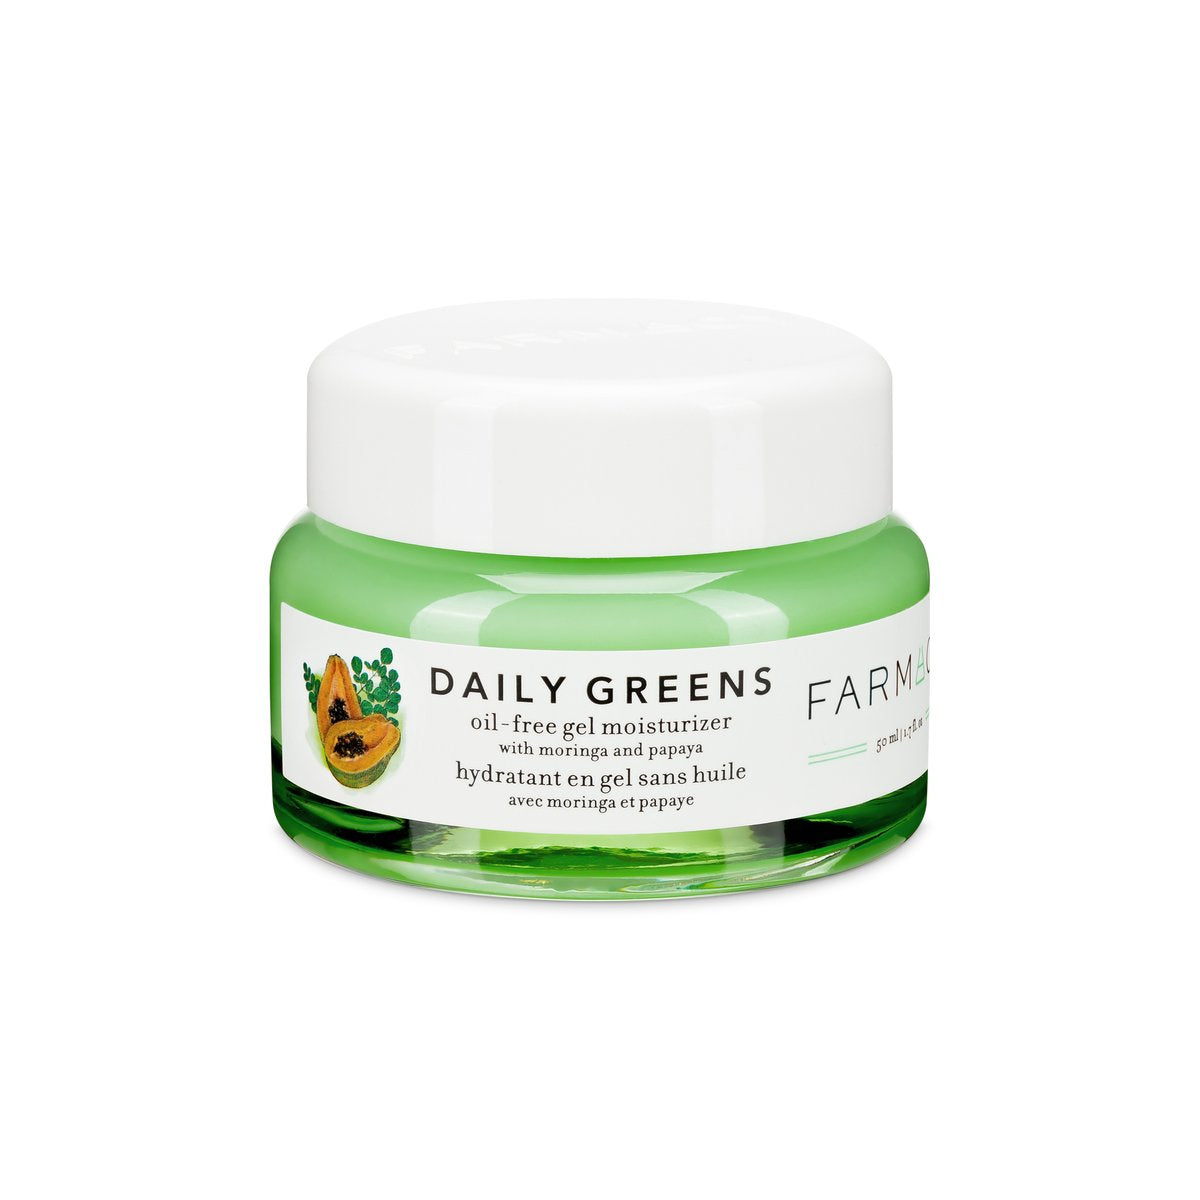 Farmacy Daily Greens Oil-free gel moisturizer with moringa and papaya (1.7 fl. oz.)